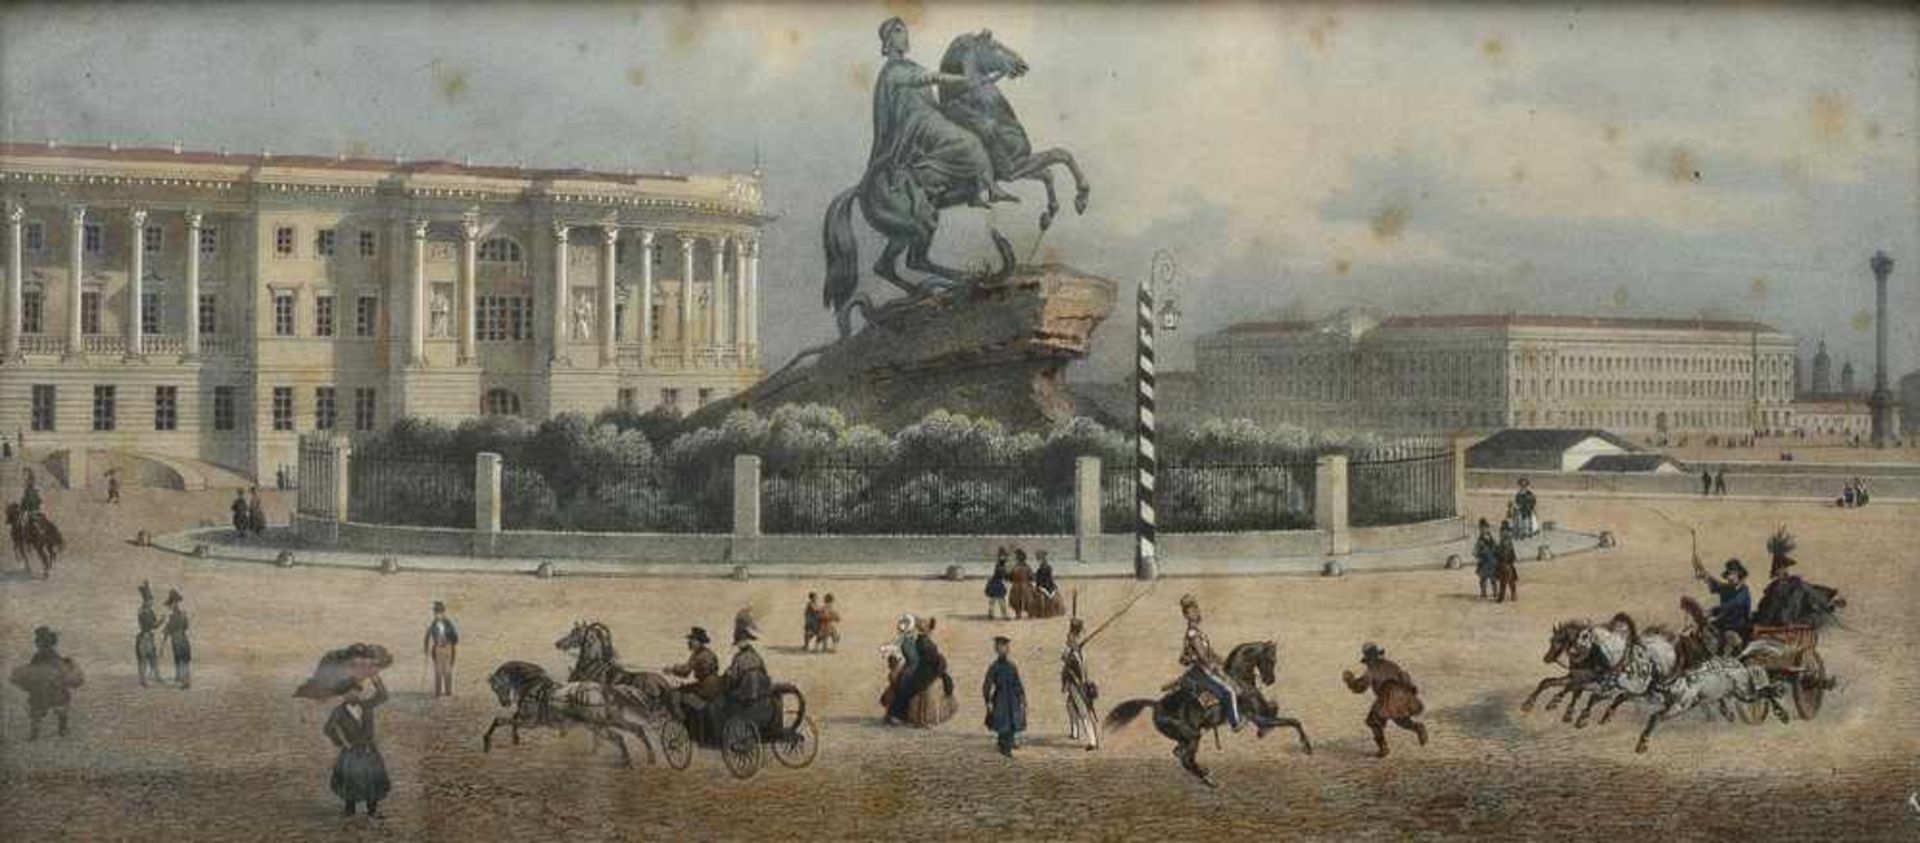 Bichebois, Louis Ph. A. (1801-1850) "Peter der Große Denkmal in St. Petersburg", Lithographie,